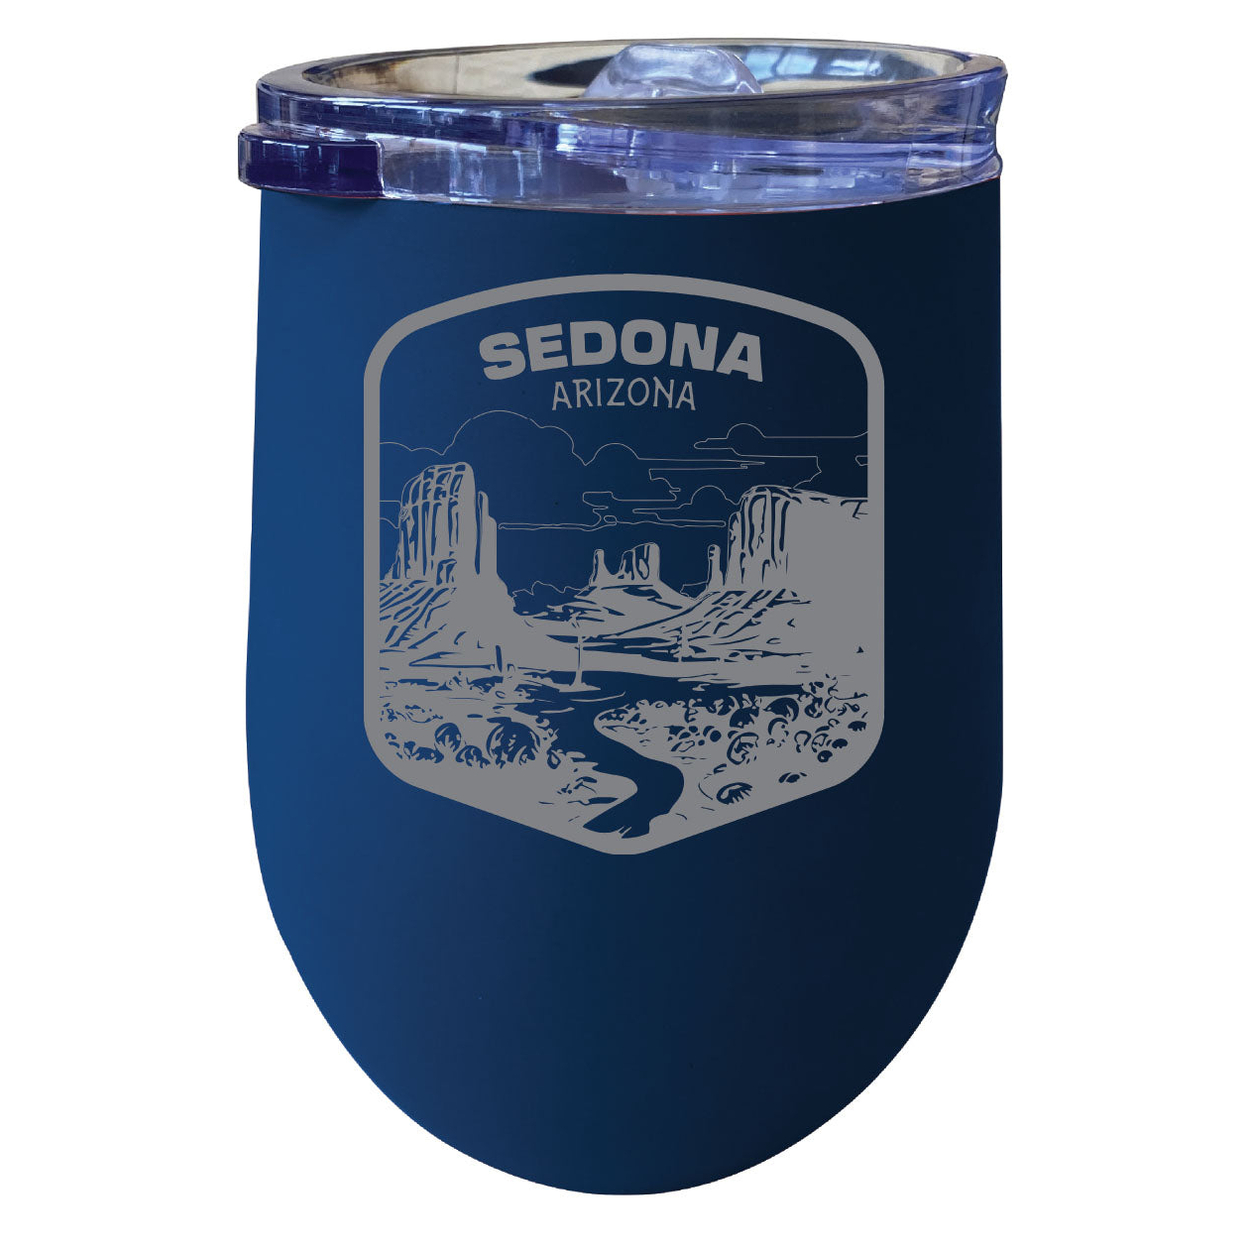 Sedona Arizona Souvenir 12 Oz Engraved Insulated Wine Stainless Steel Tumbler - Navy,,4-Pack